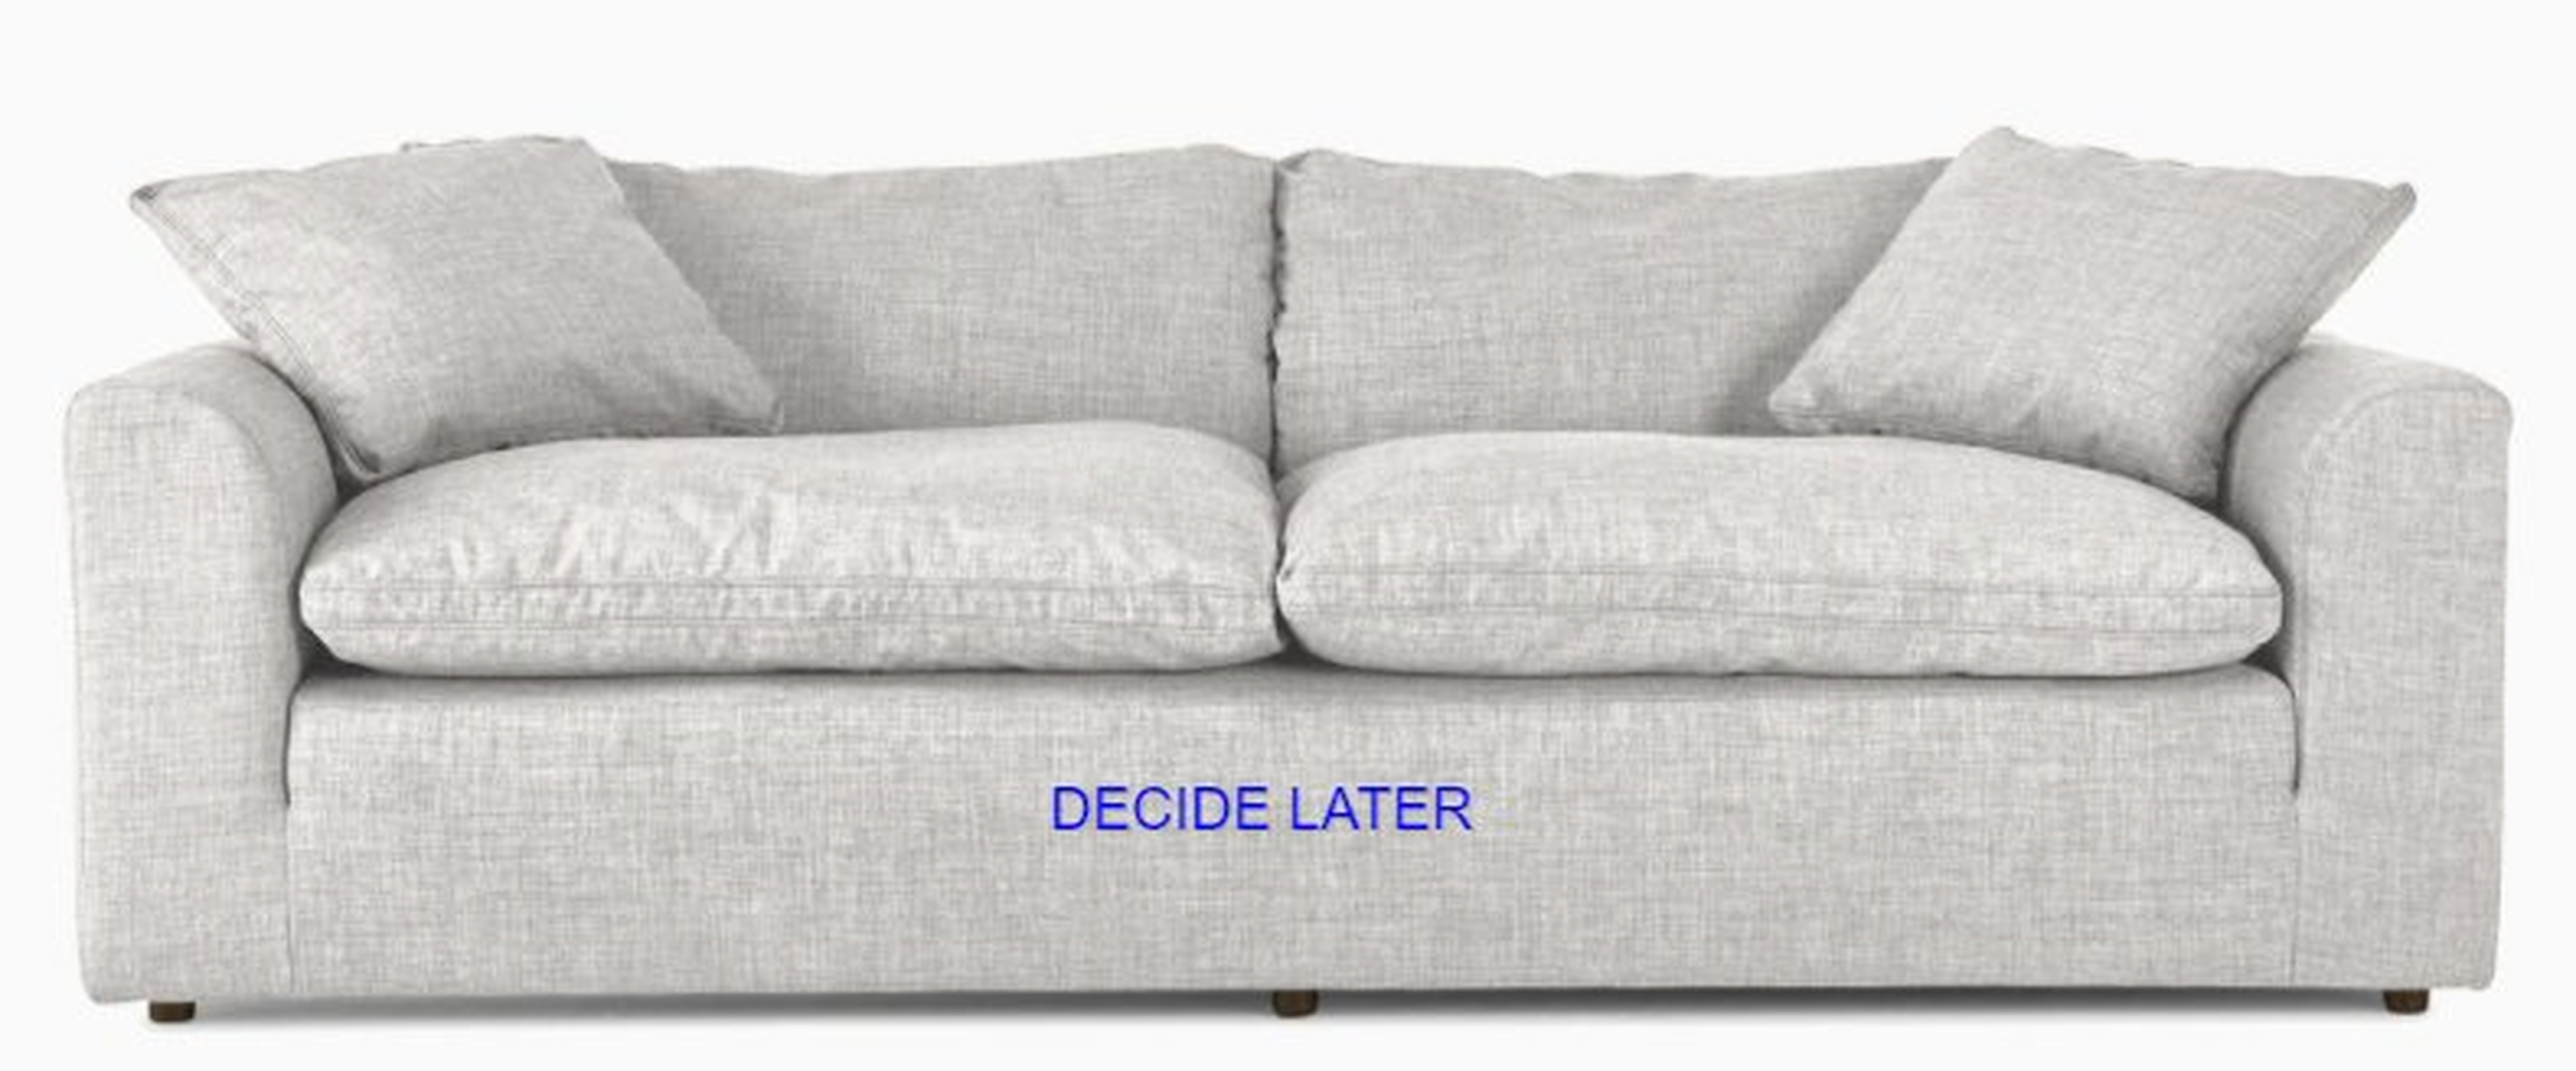 Bryant Mid Century Modern Sofa - "Decide Later" fabric - Joybird